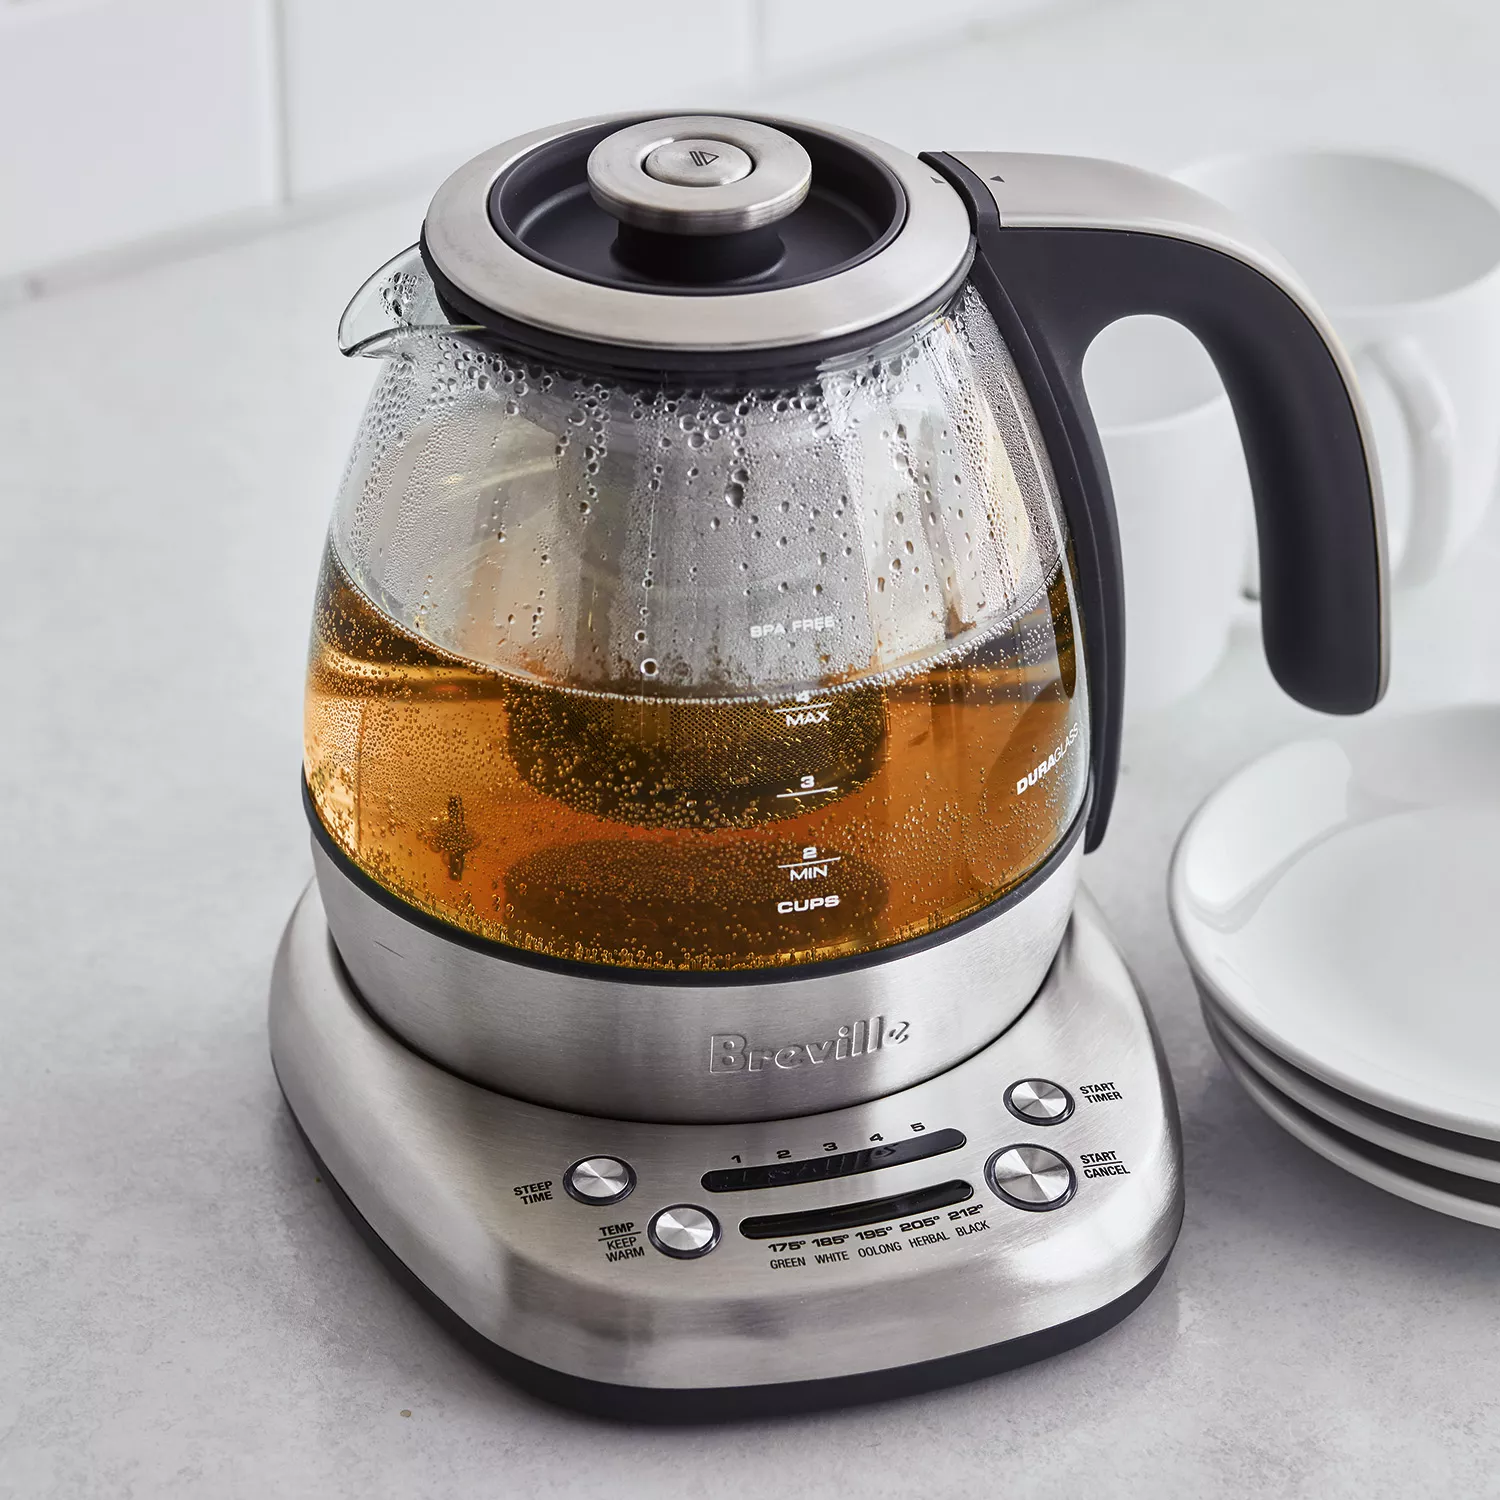 Review: Breville BTM500 Smart Tea Infuser Compact